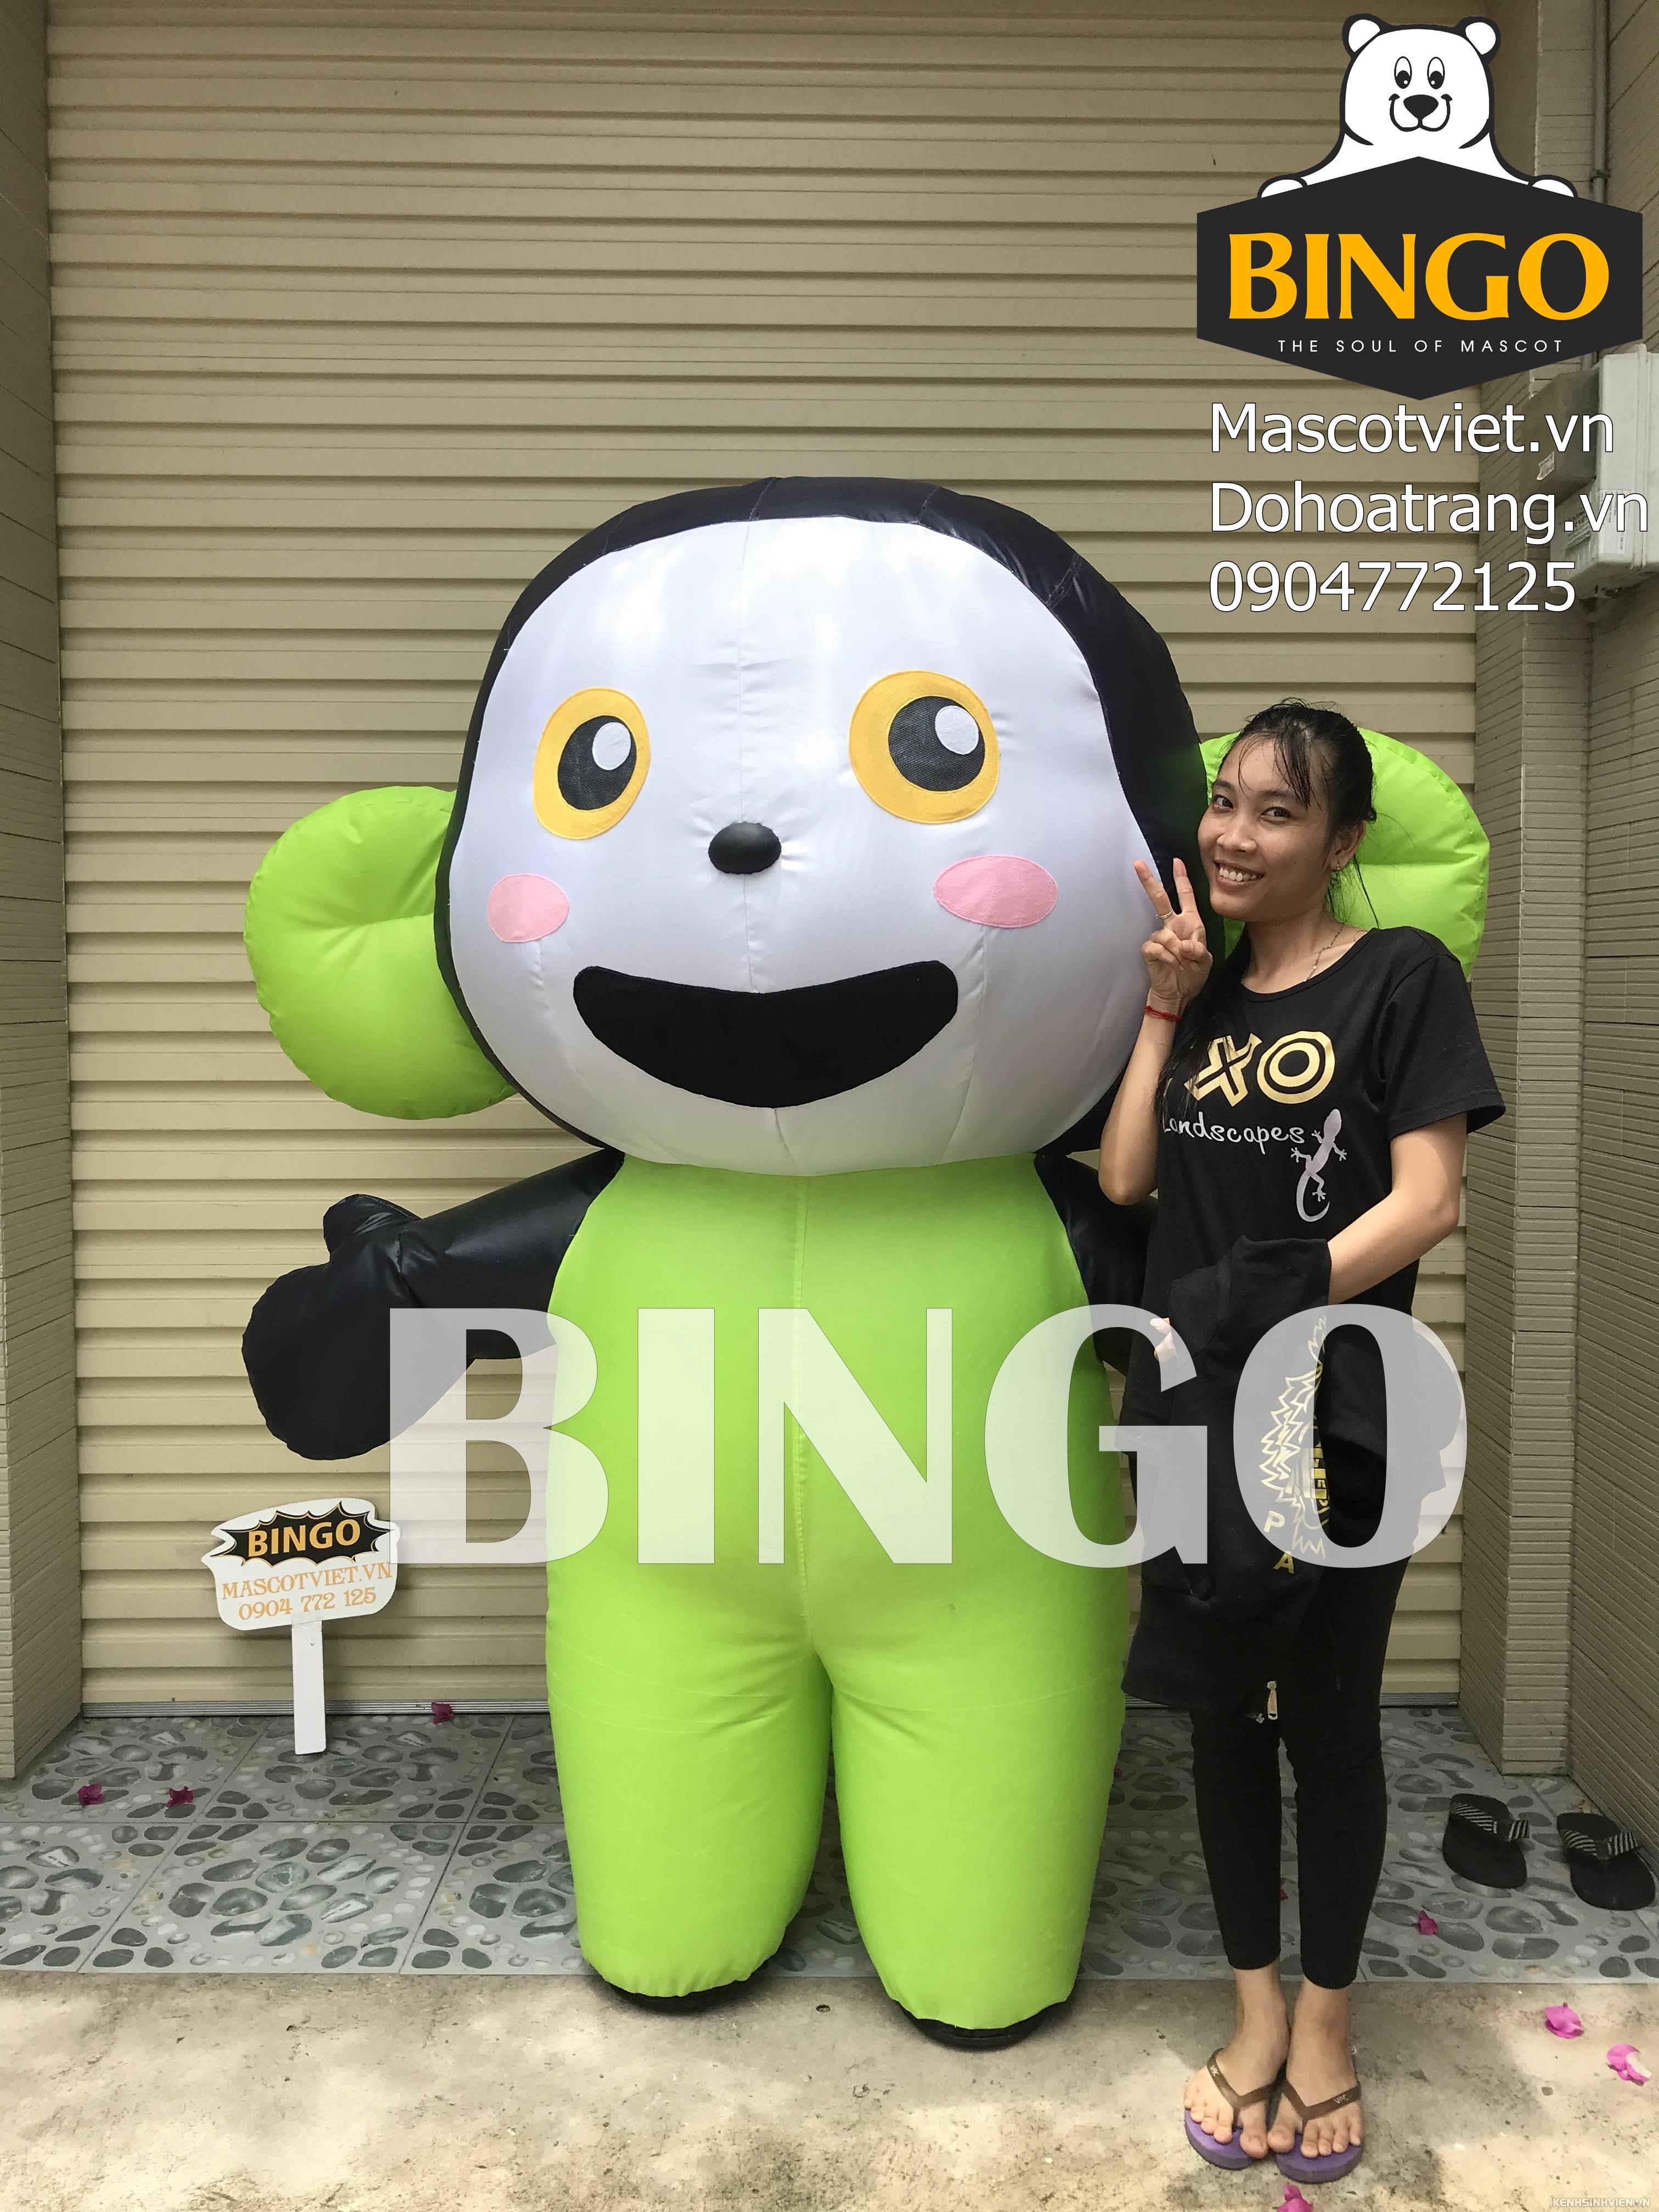 mascot-hoi-con-khi-apax-bingo-costumes-0904772125.jpg